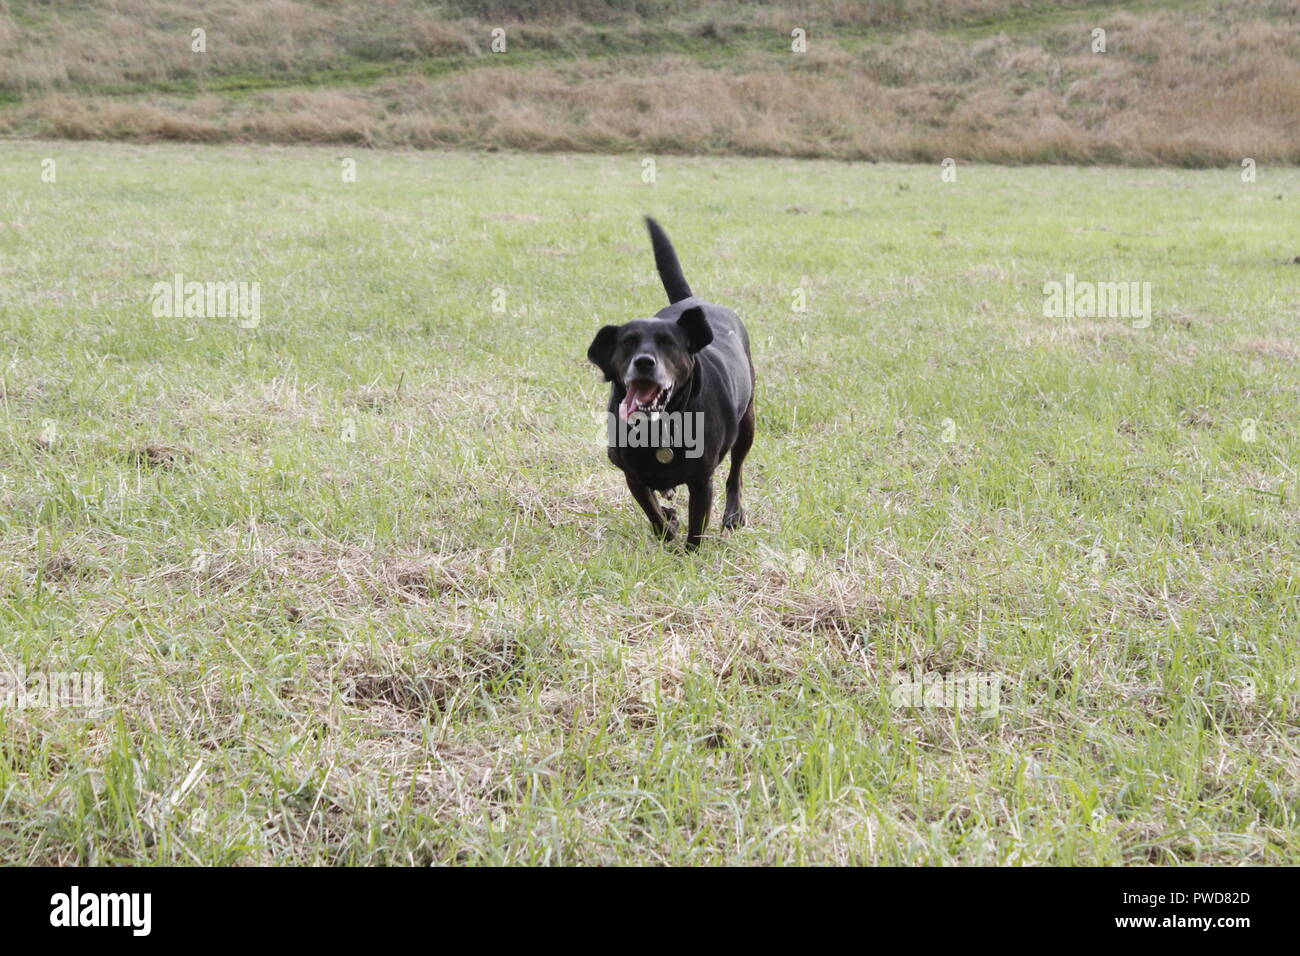 Running Dog Banque D'Images